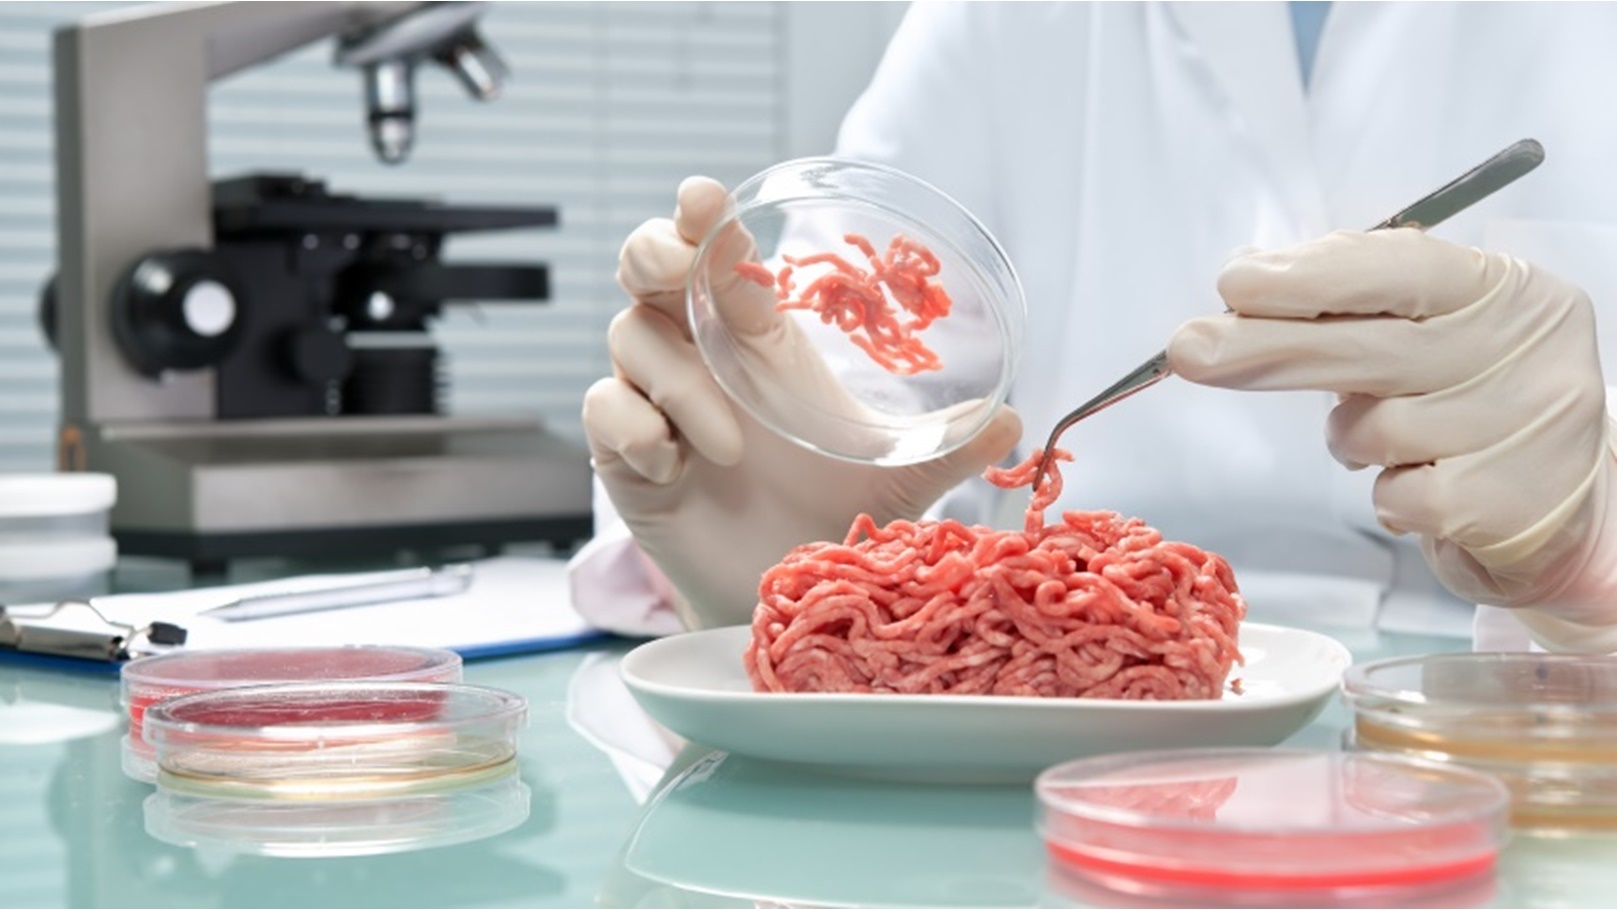 lab-grown-meat